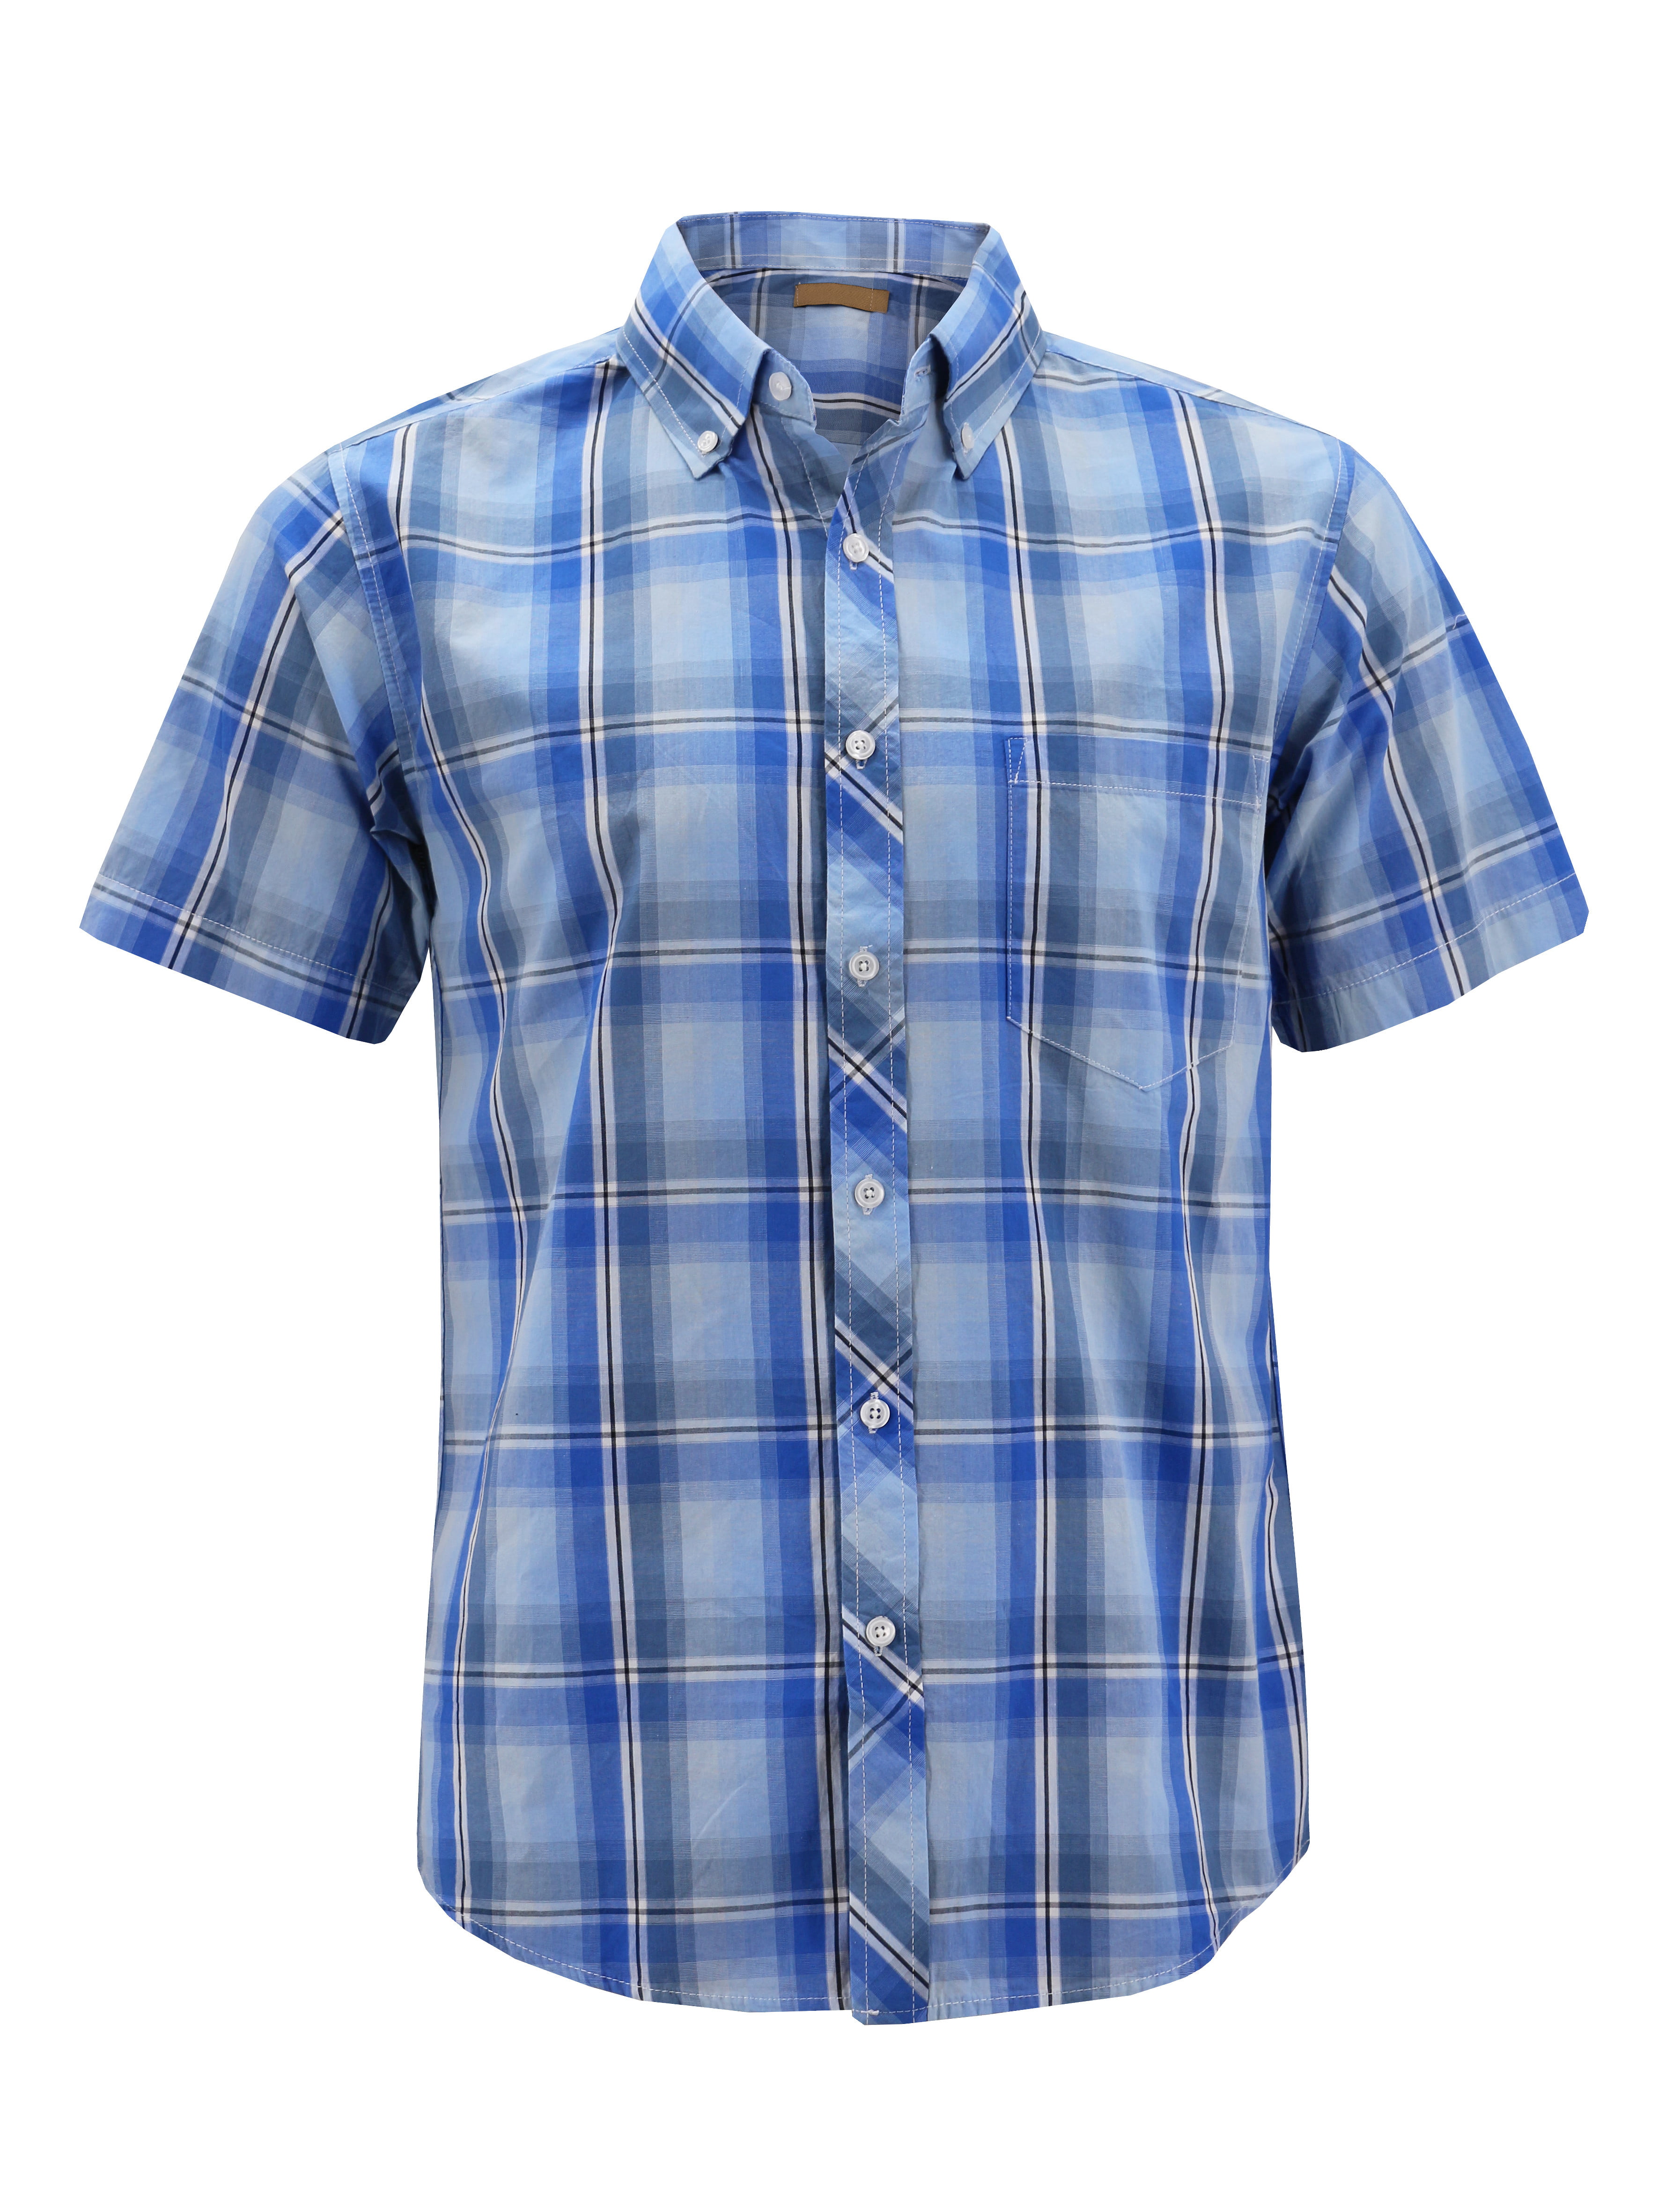 Mens Cotton Casual Short Sleeve Classic Collared Plaid Button Up Dress Shirt 11 Light Blue